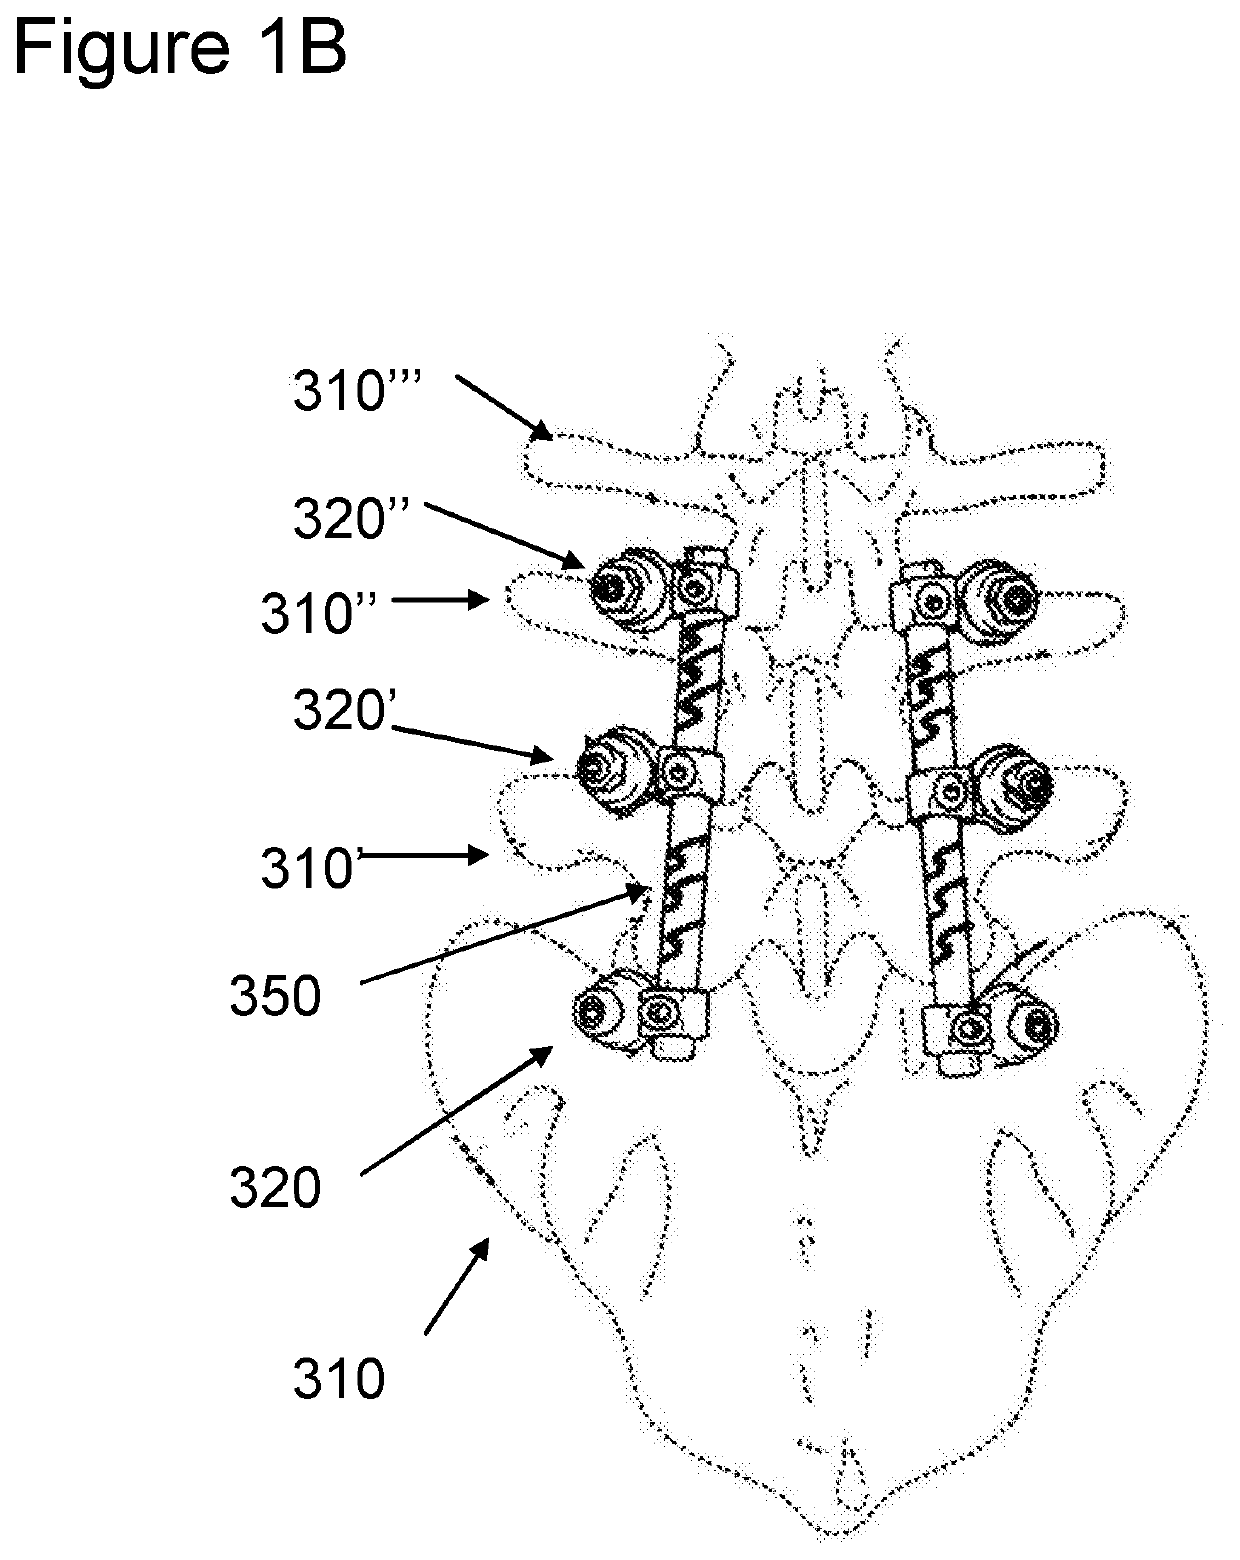 Flexible spine components having multiple slots